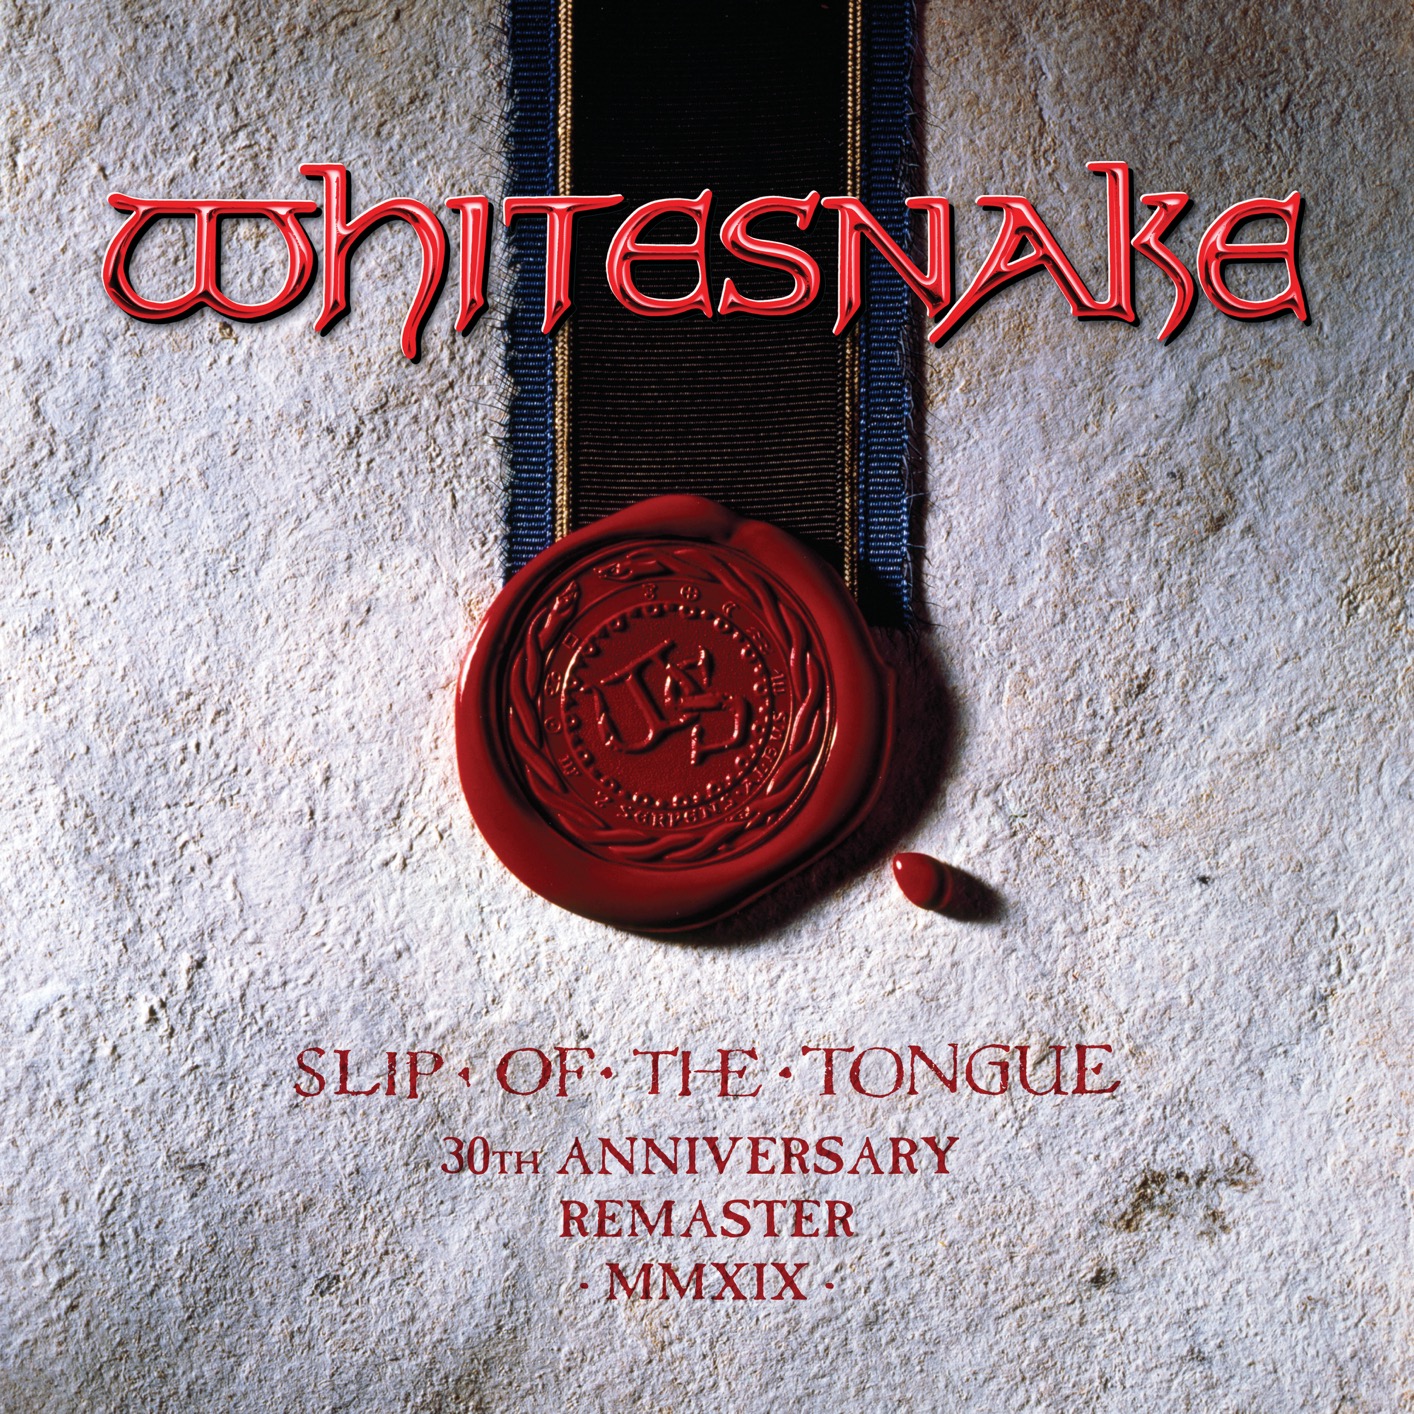 Whitesnake - Slip Of The Tongue (Remaster) (1989/2019) [FLAC 24bit/96kHz]